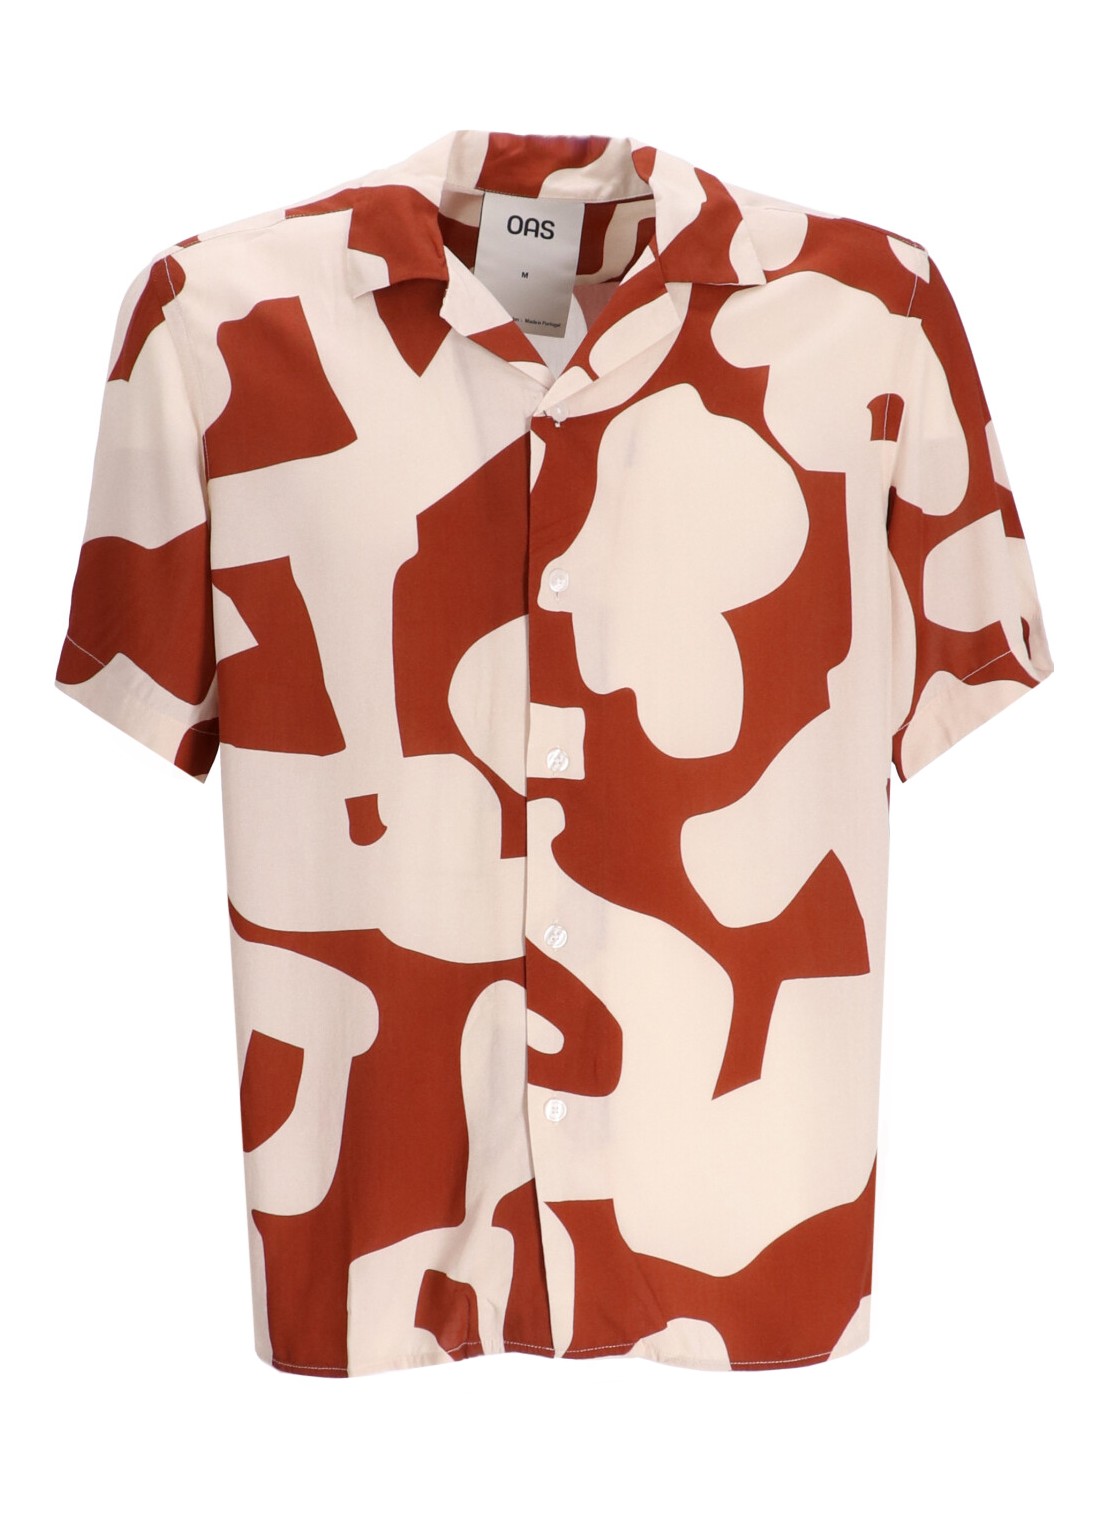 Camiseria oas shirt manrusset puzzlotec viscose shirt - 700546 russet puzzlotec talla S
 